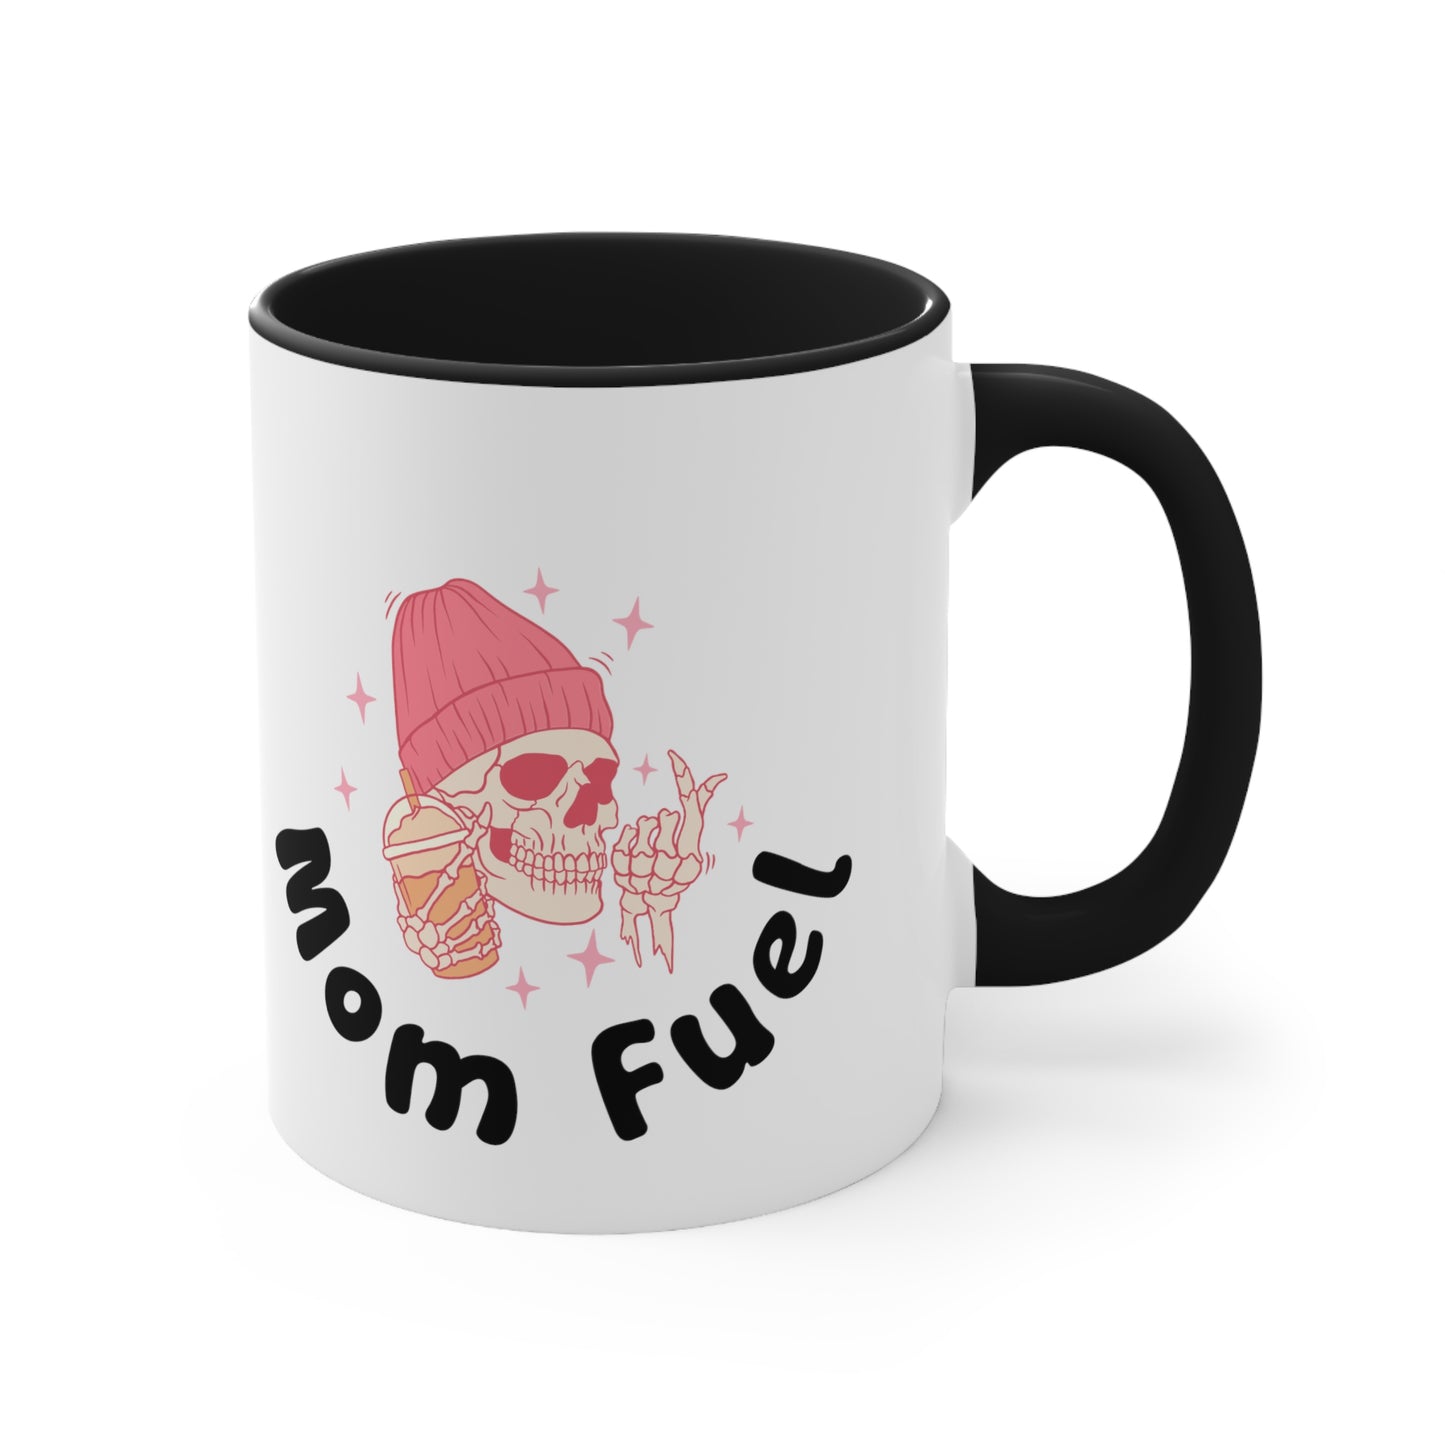 Mom Fuel, Accent Coffee Mug, 11oz